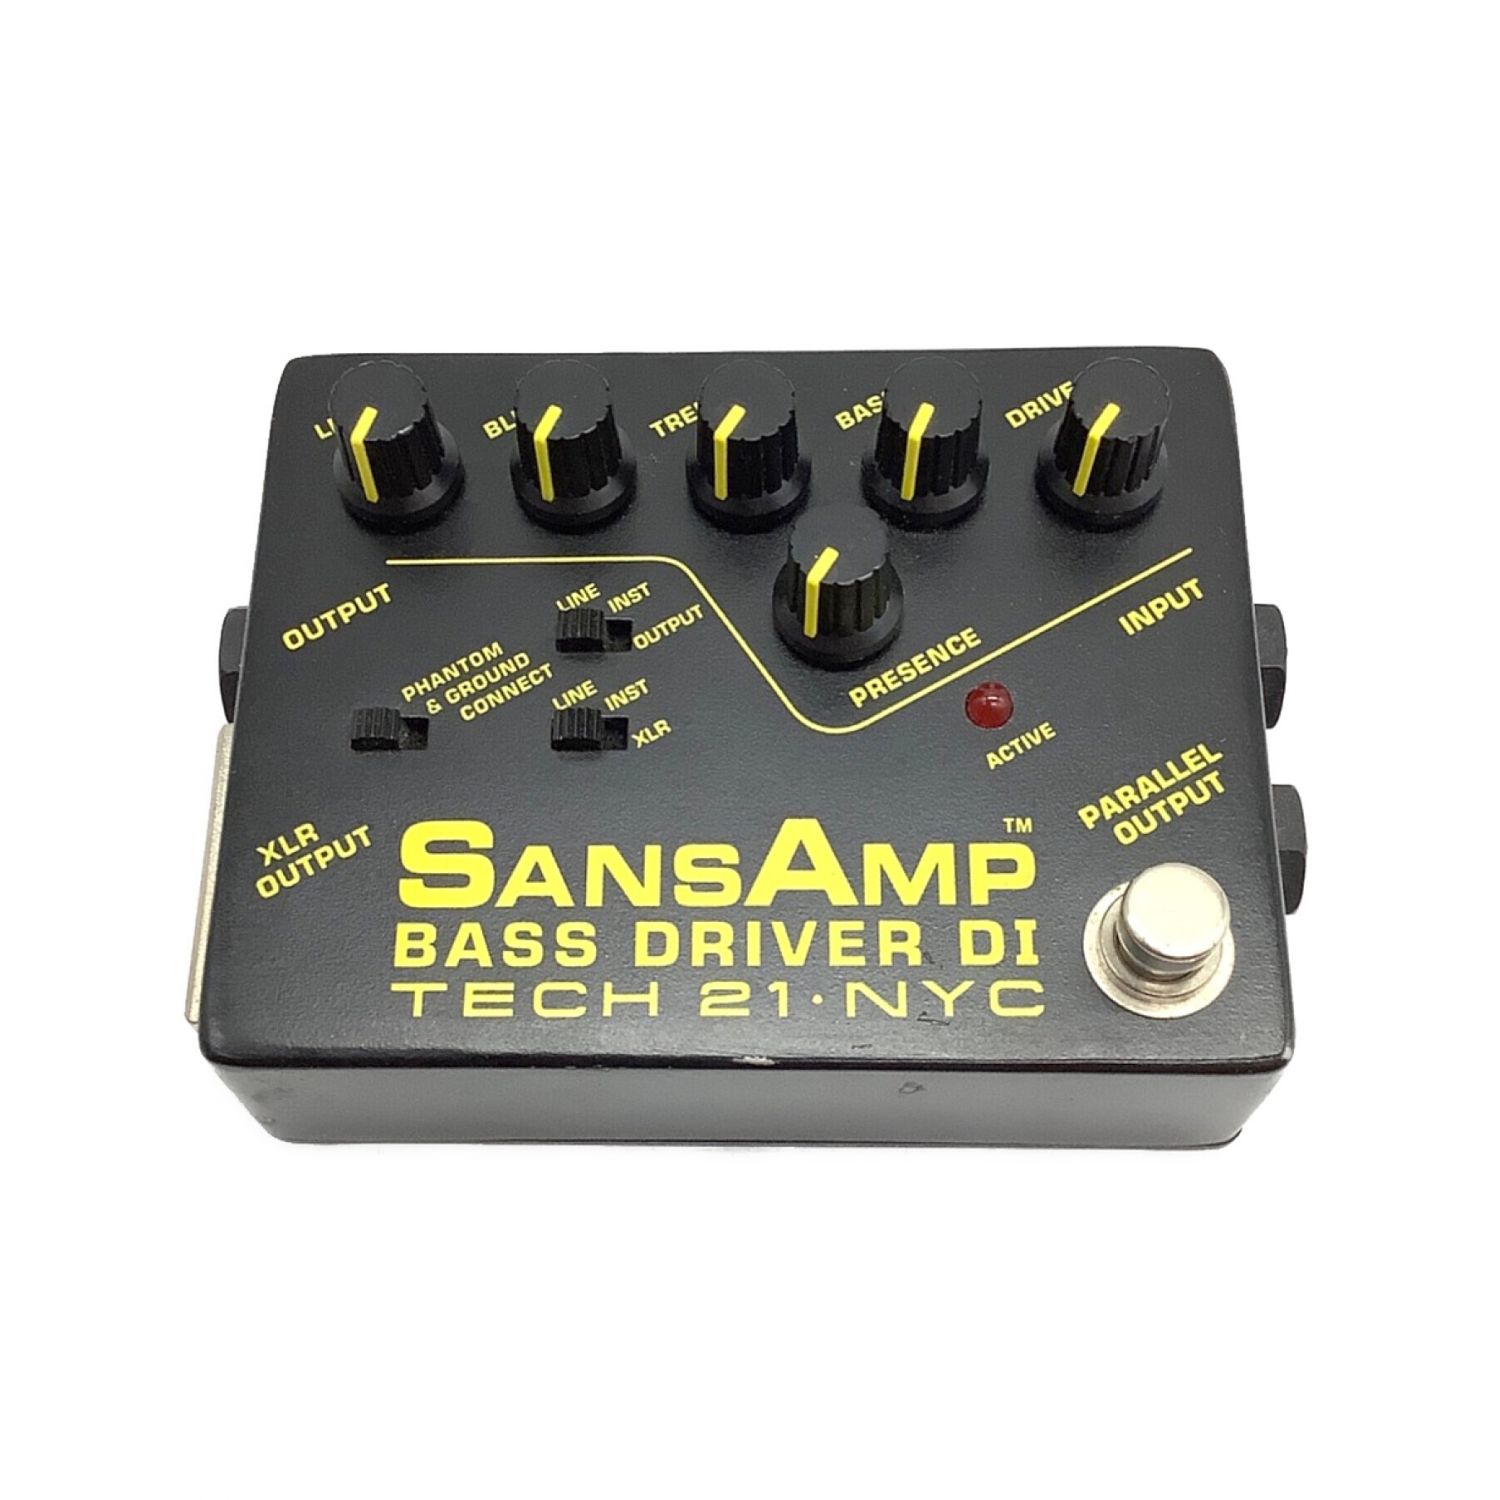 SANSAMP (サンズアンプ) Bass Driver DI 初期型 背面カバー欠品 TECH21